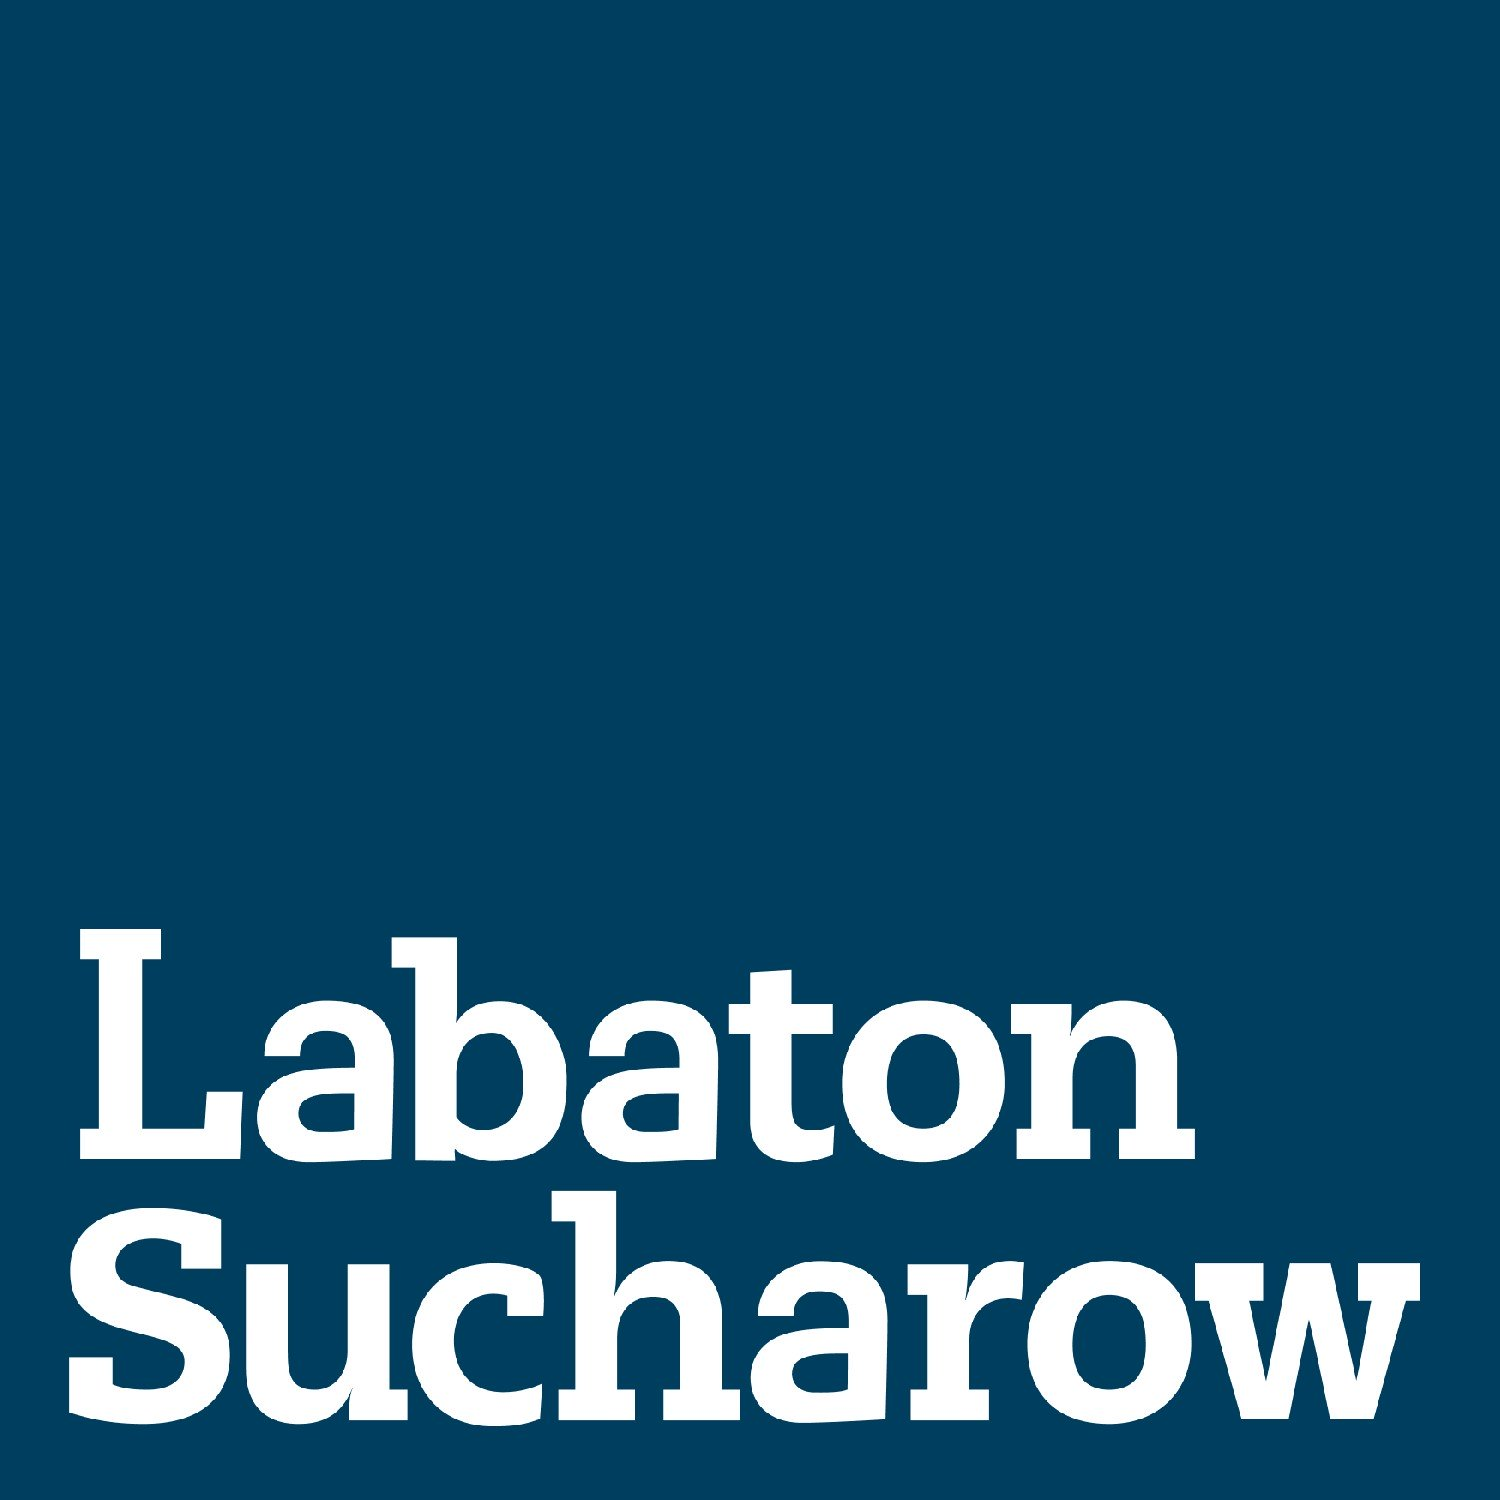 Labaton Sucharow LLP, Monday, September 21, 2020, Press release picture